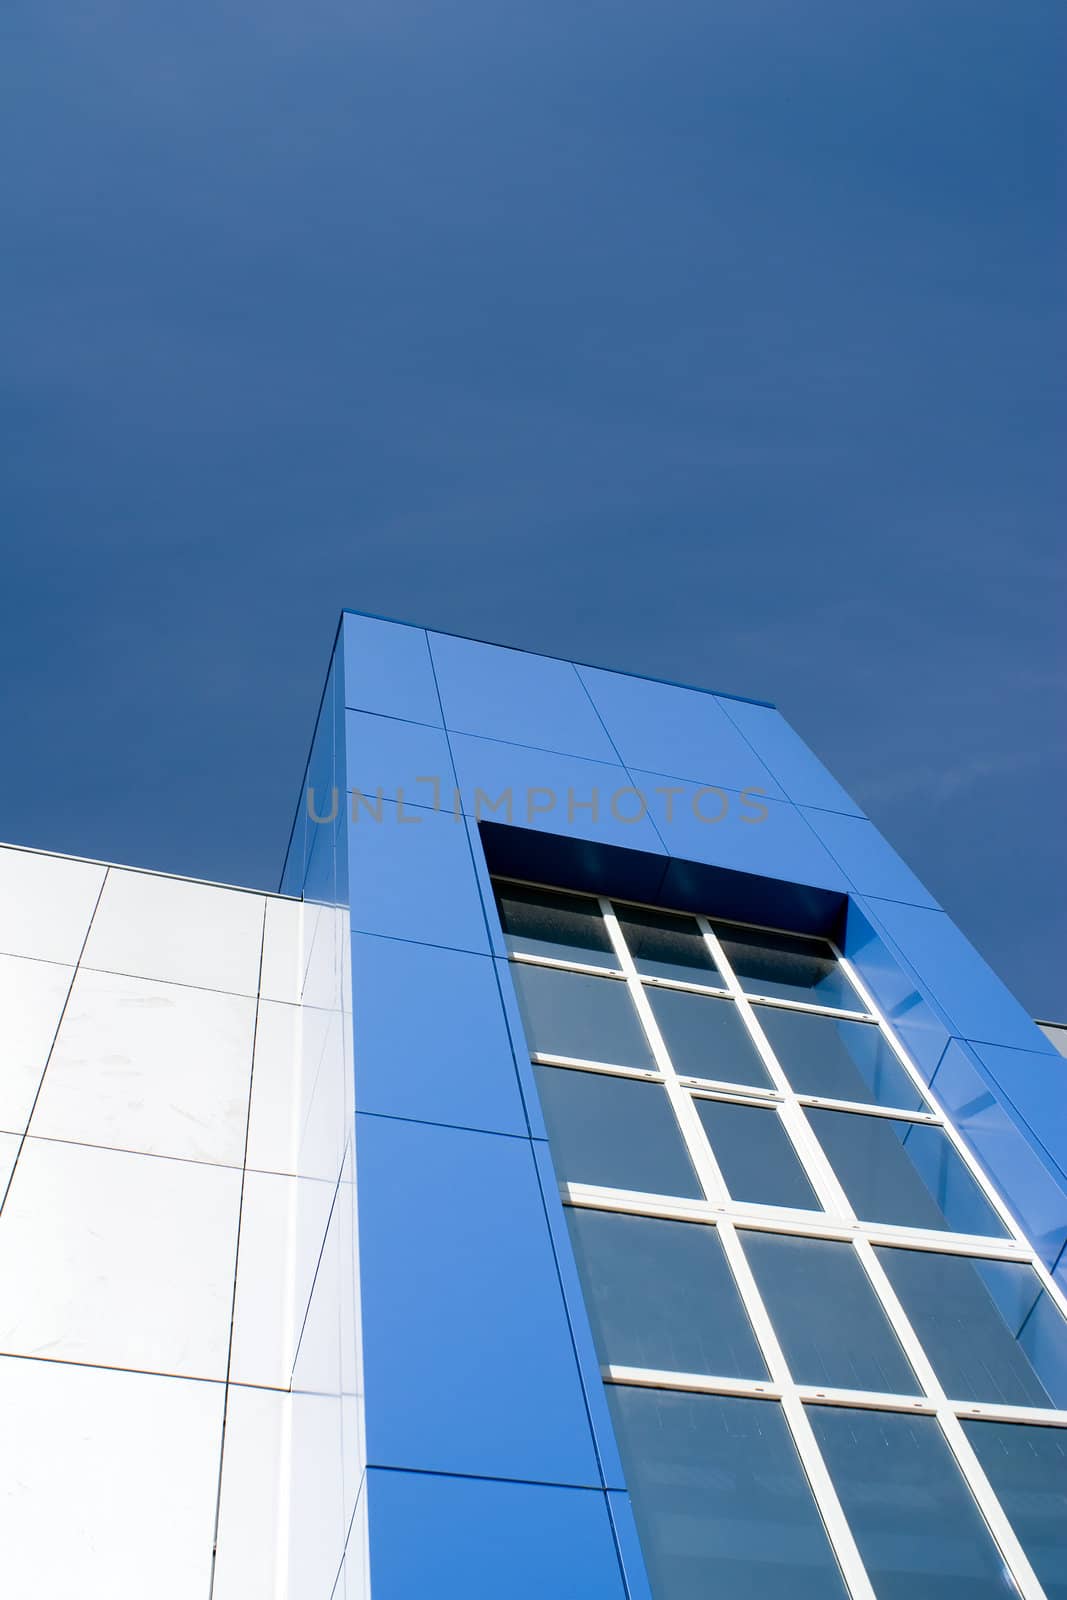 Morden office building facade against clear blue sky.